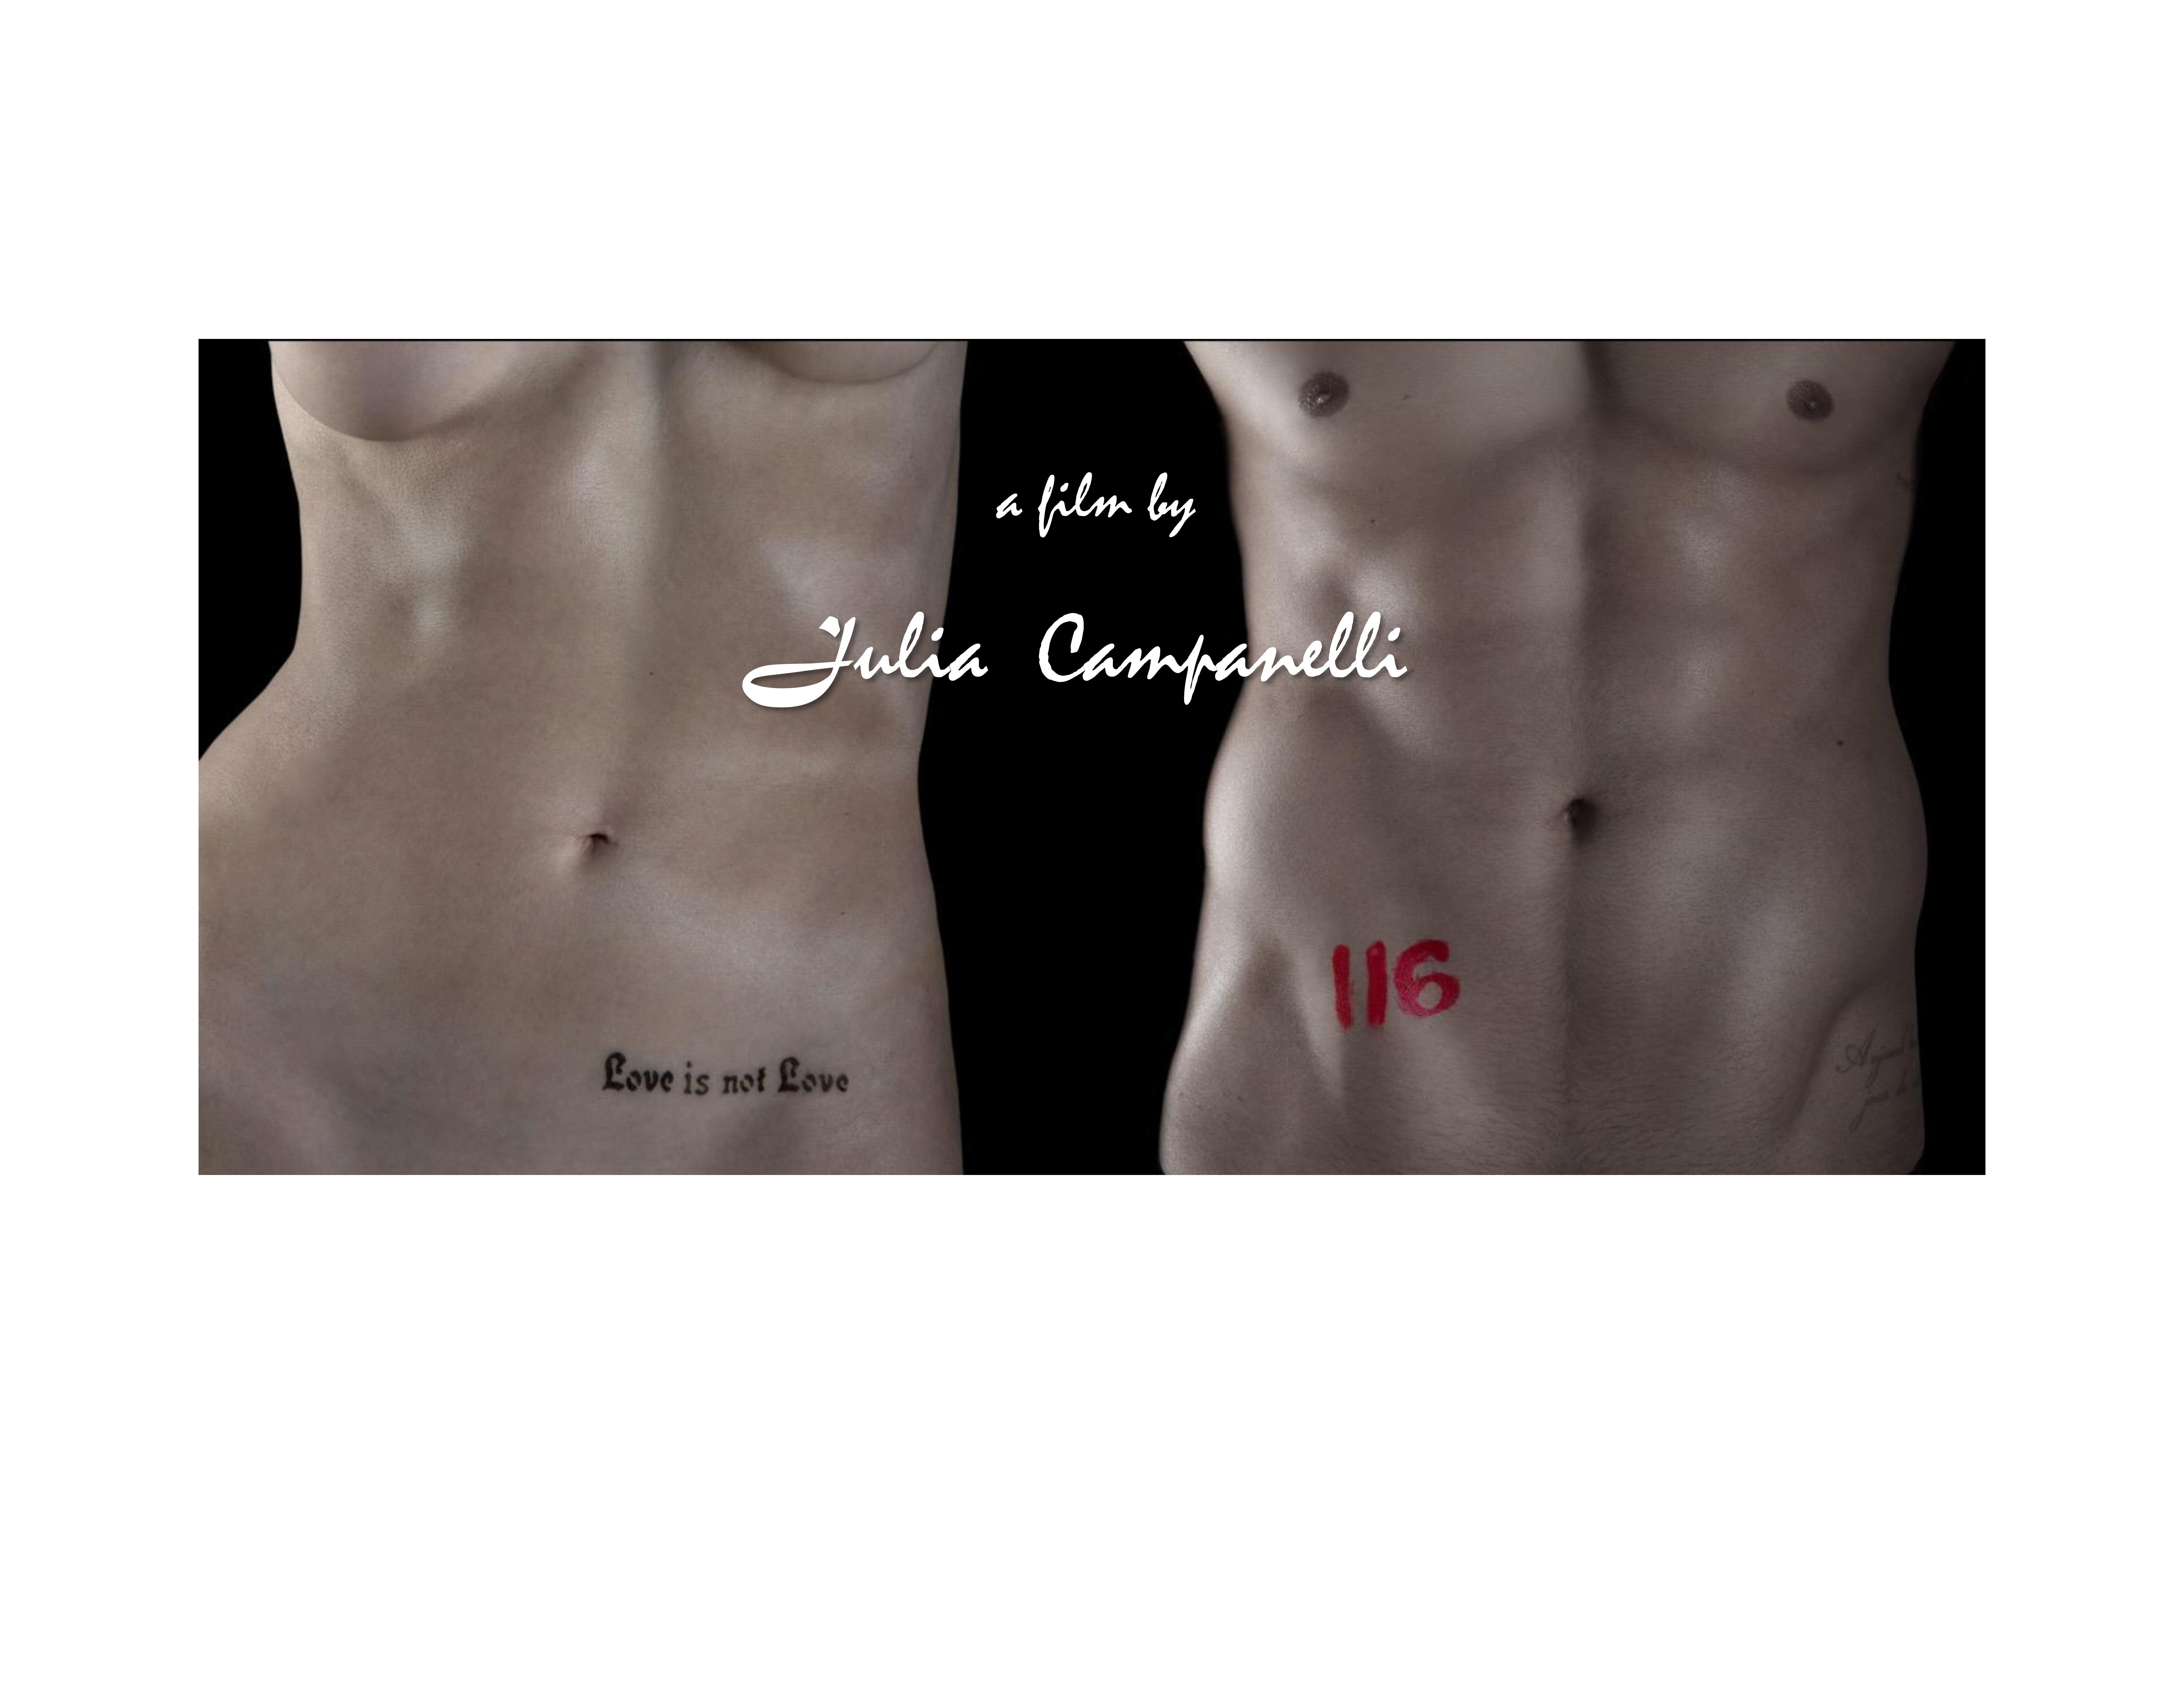 116, a film by Julia Campanelli (2016)